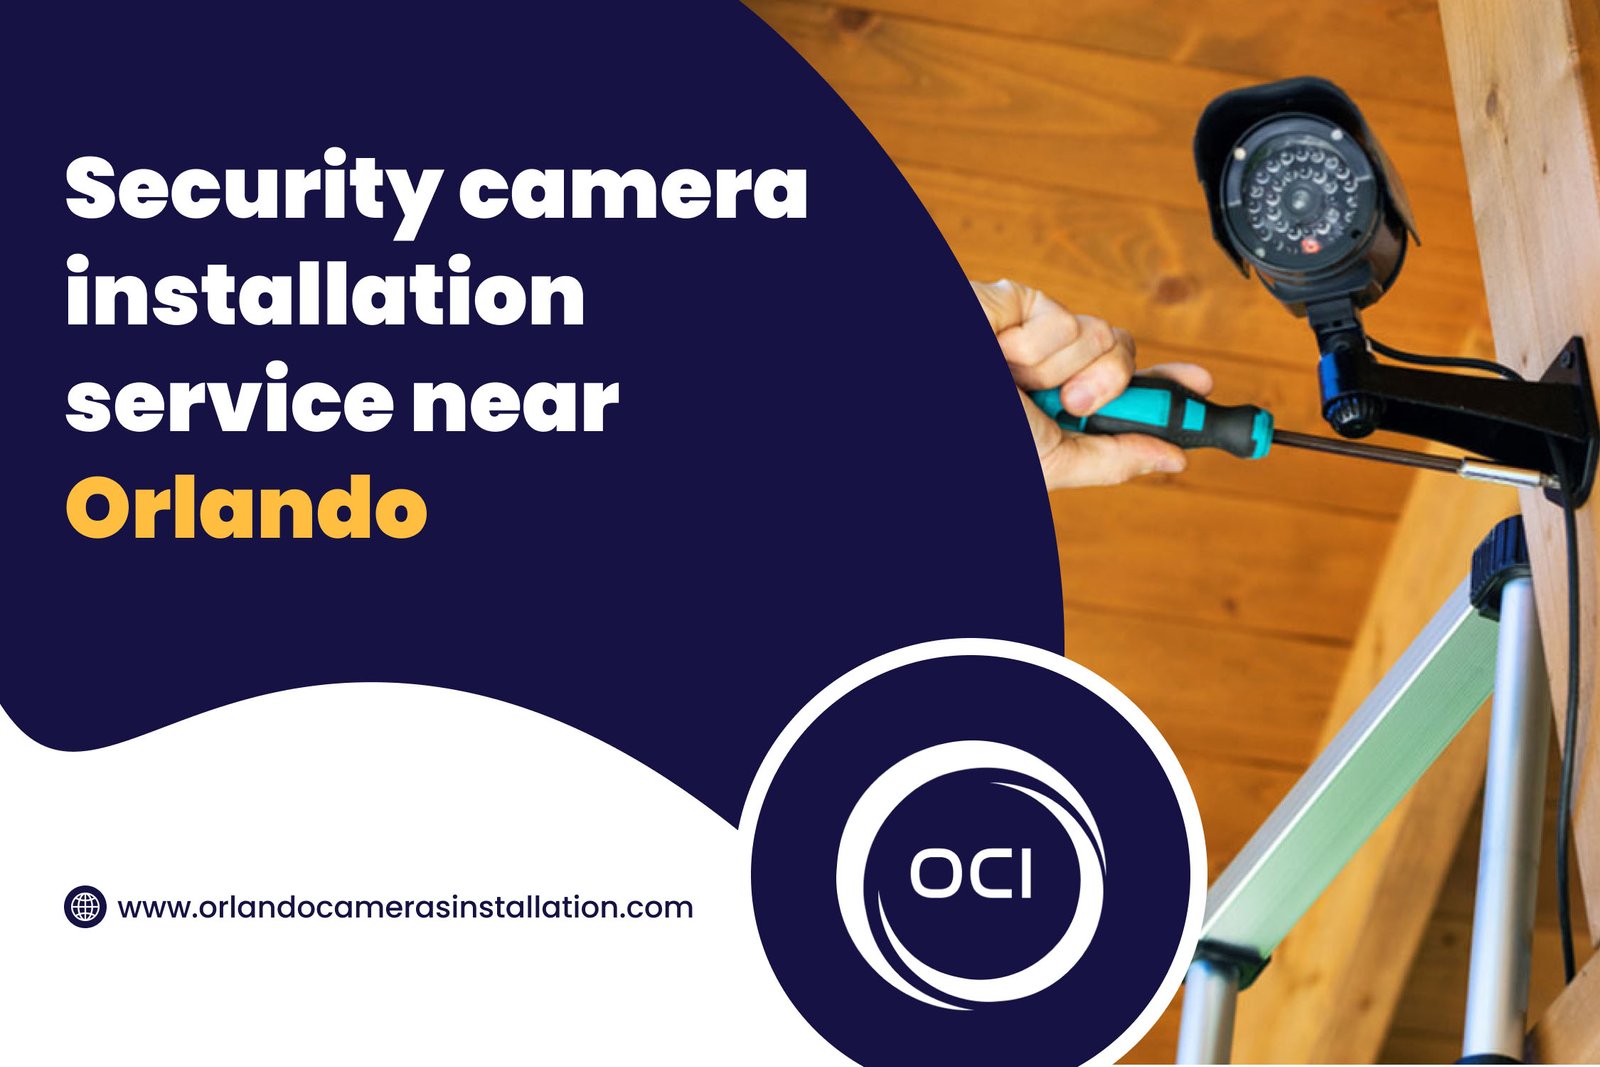 Security camera installation service near Orlando